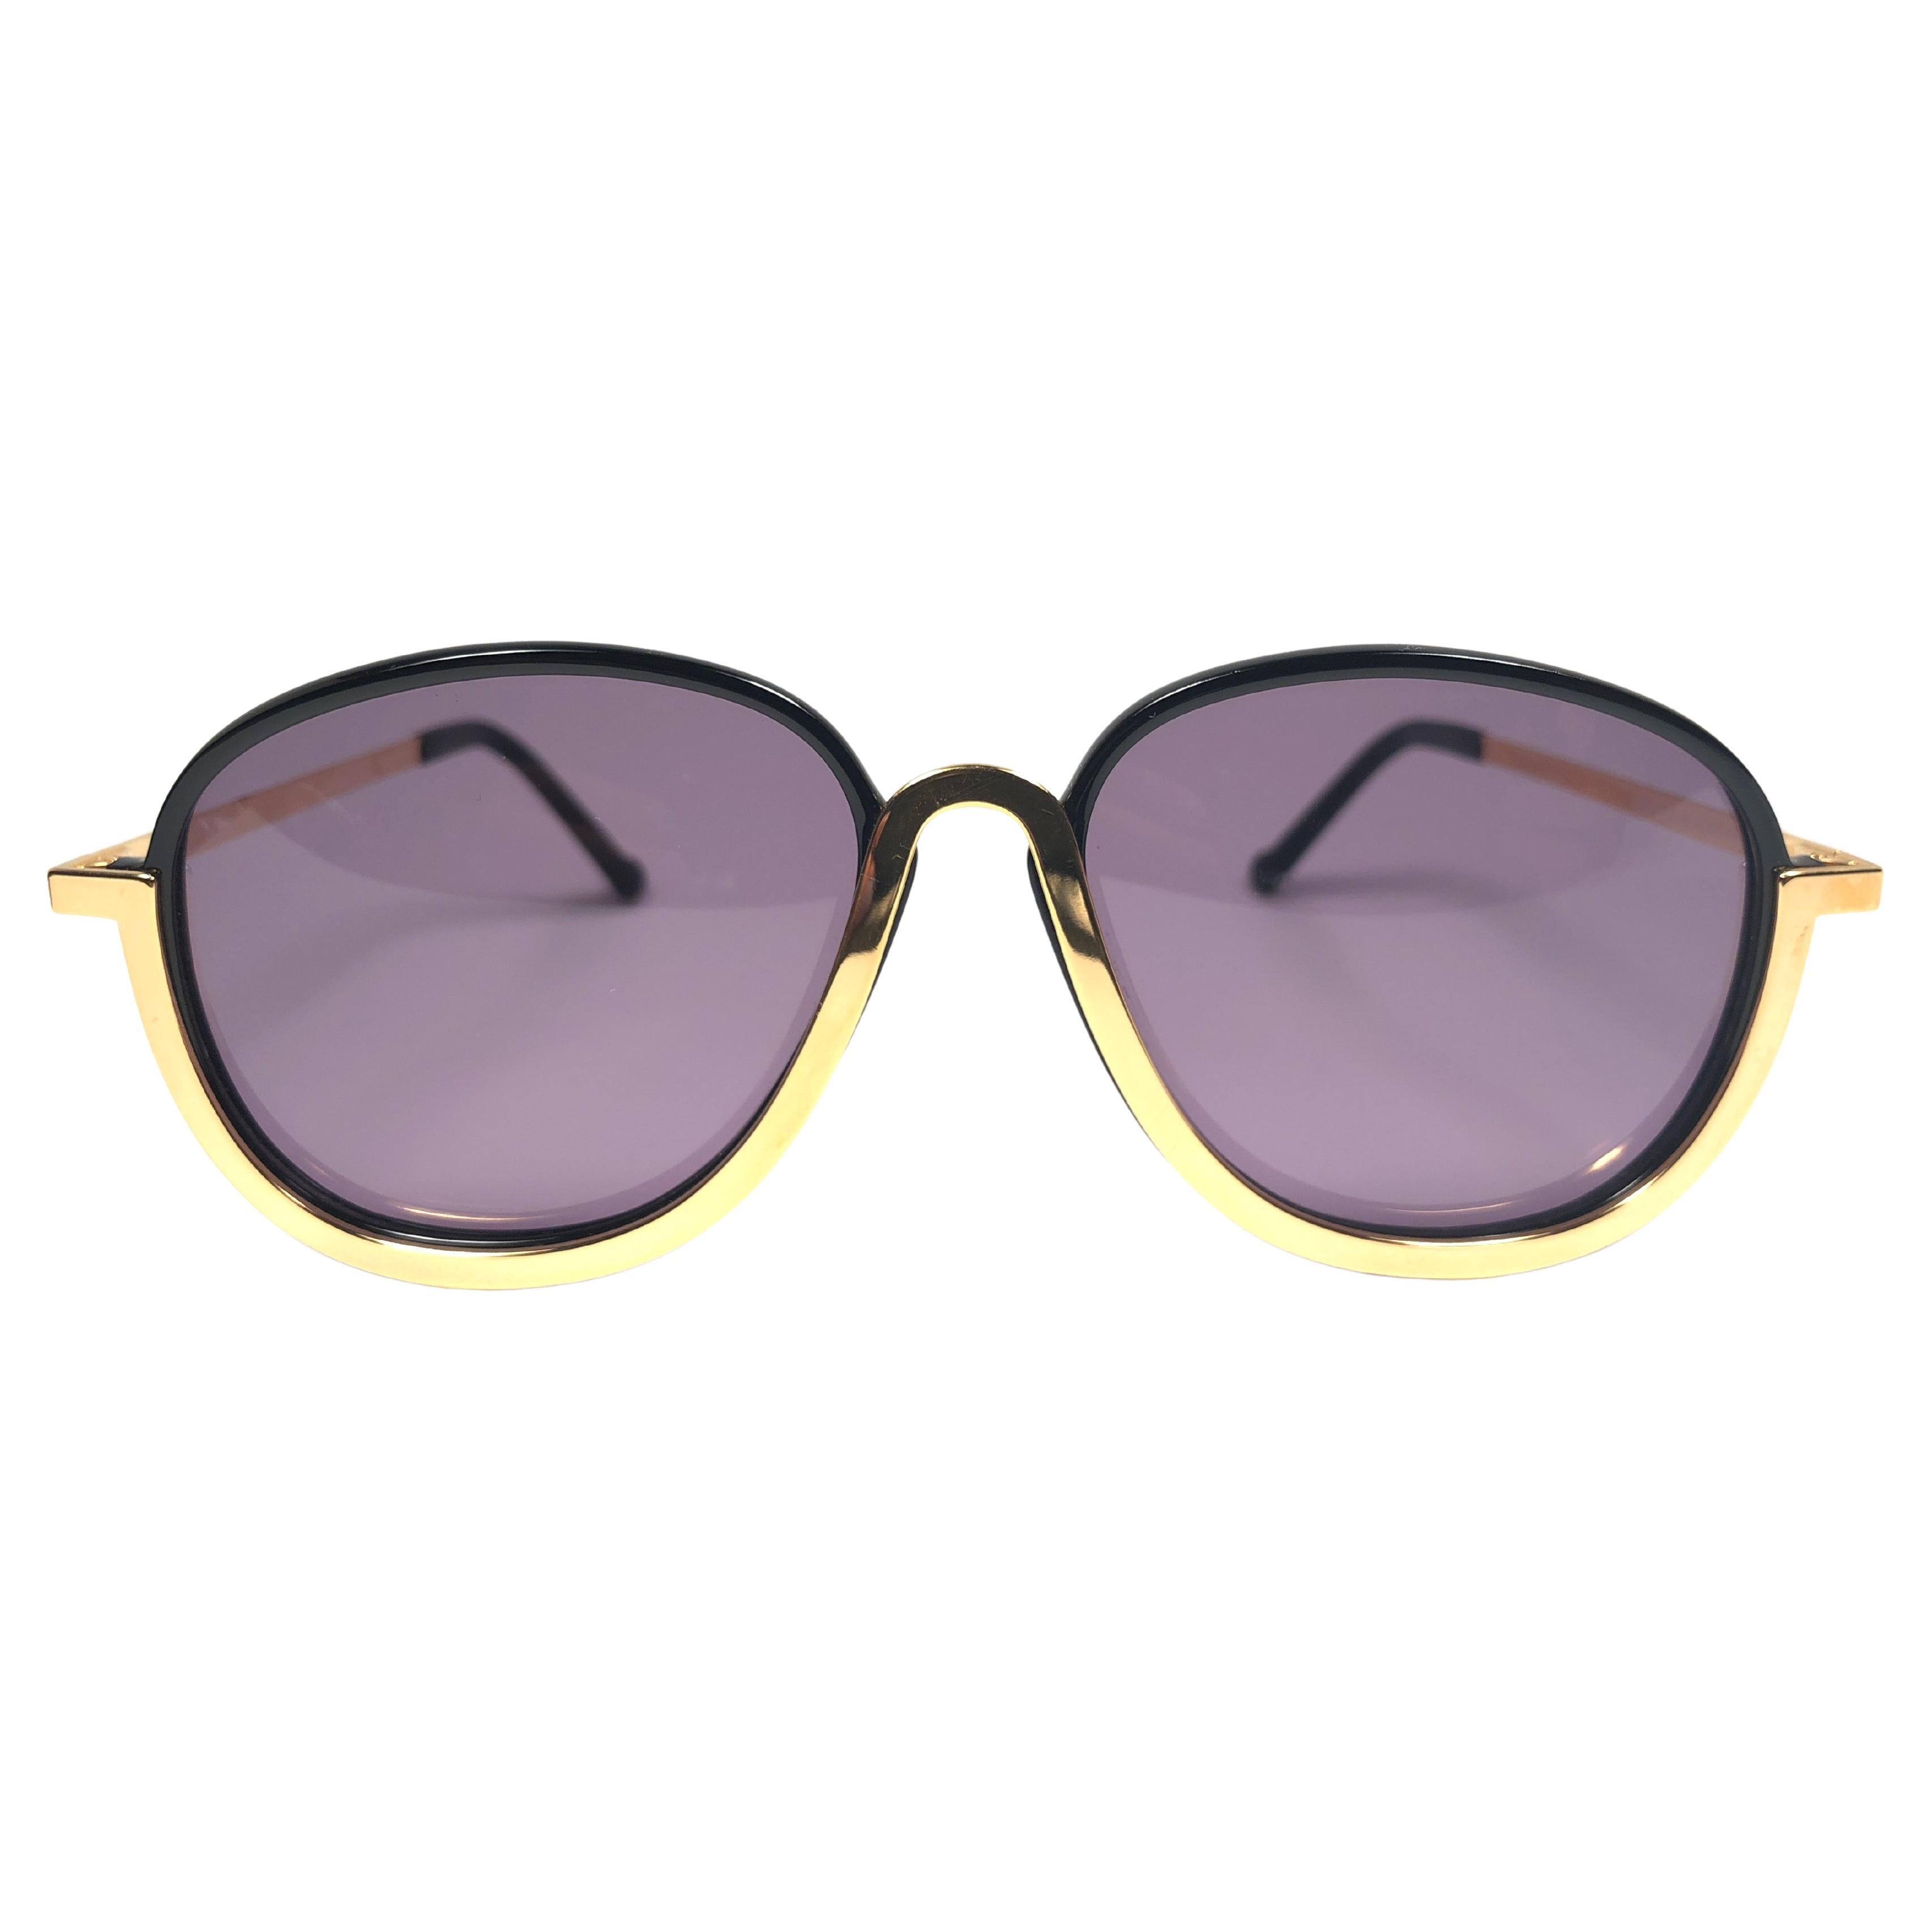 New Vintage Christian Lacroix Black Gold Accents 1980 France Sunglasses For Sale